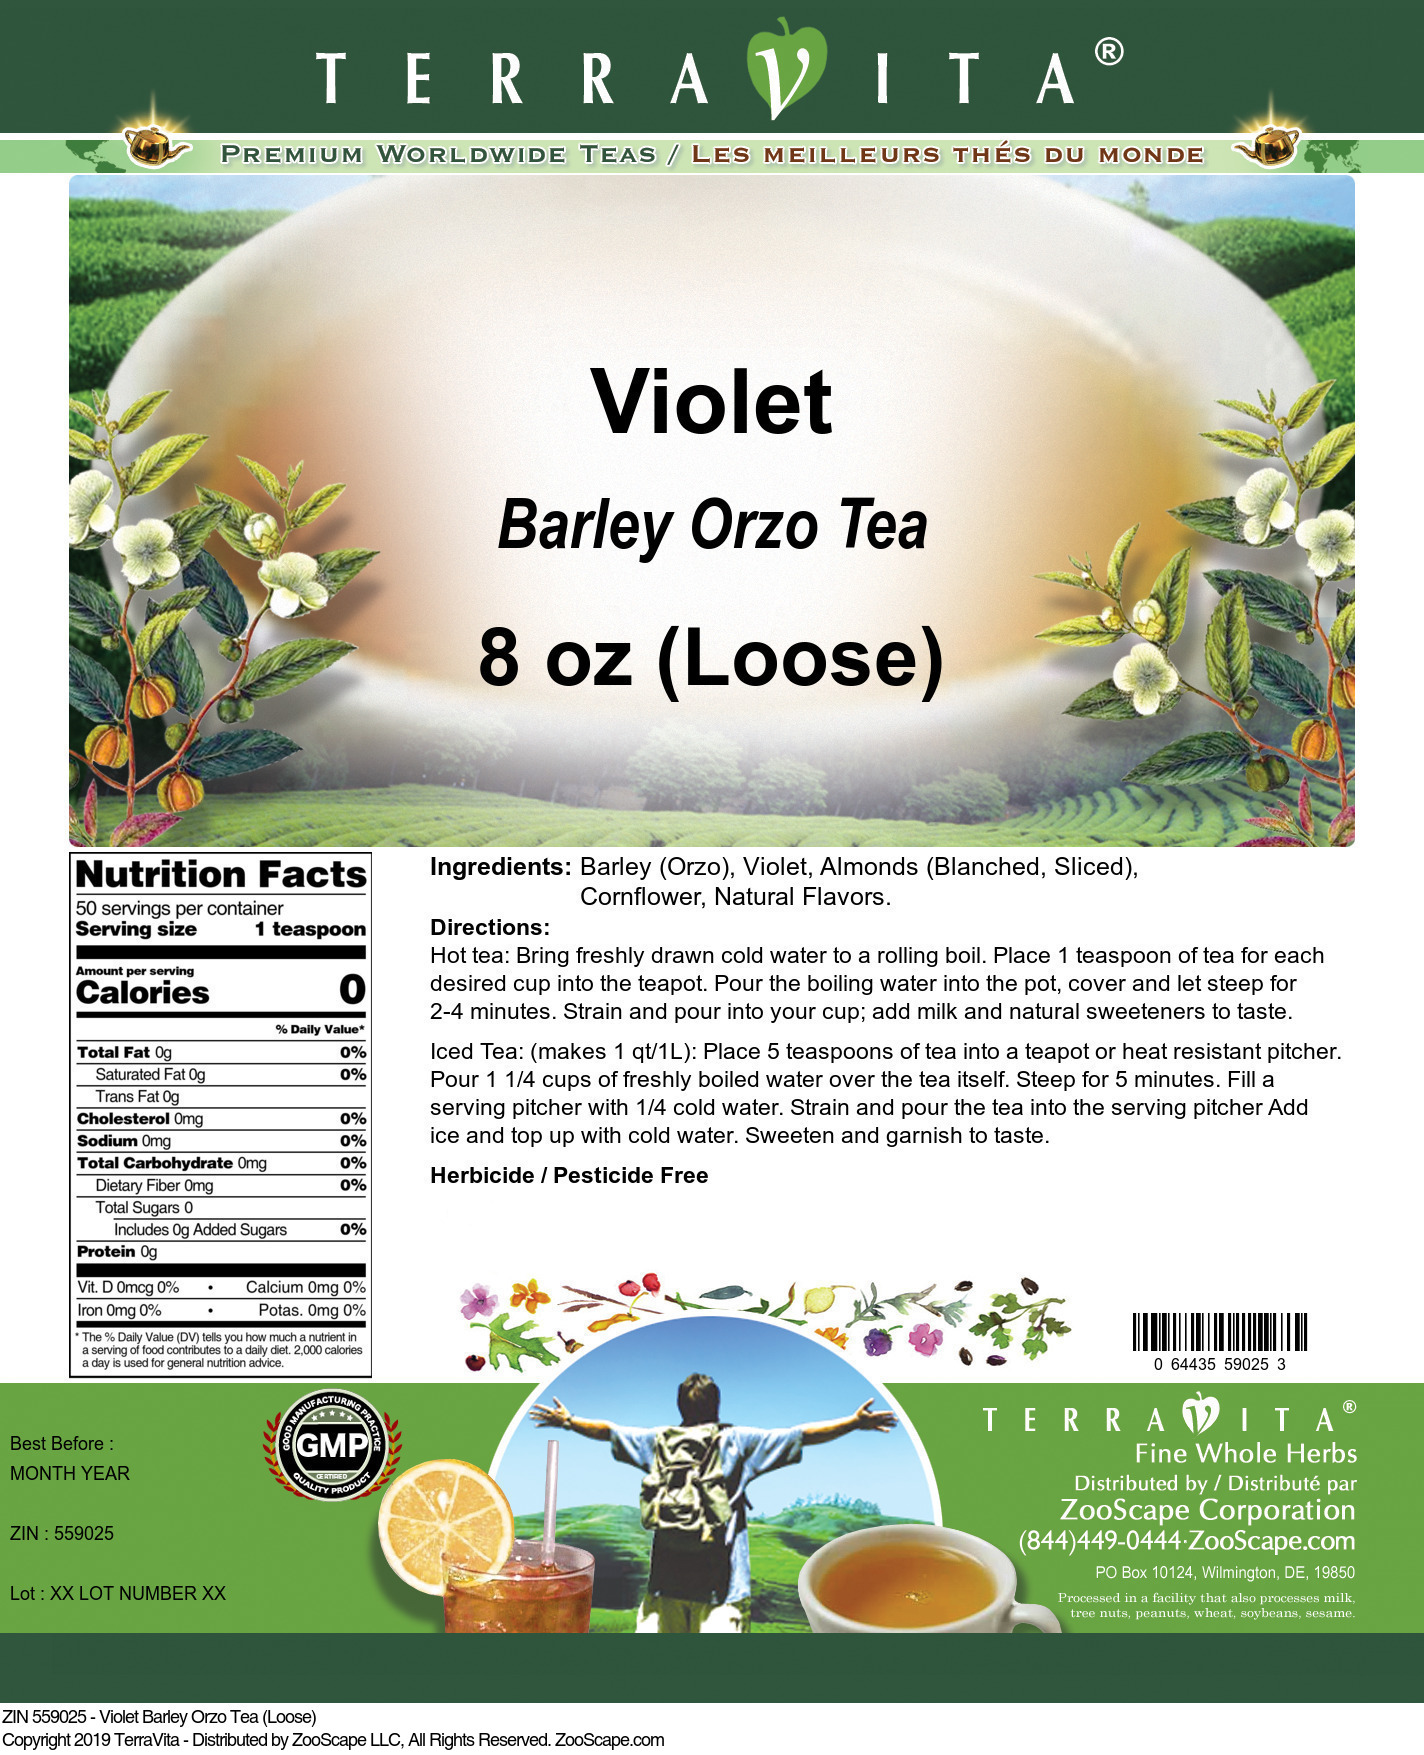 Violet Barley Orzo Tea (Loose) - Label